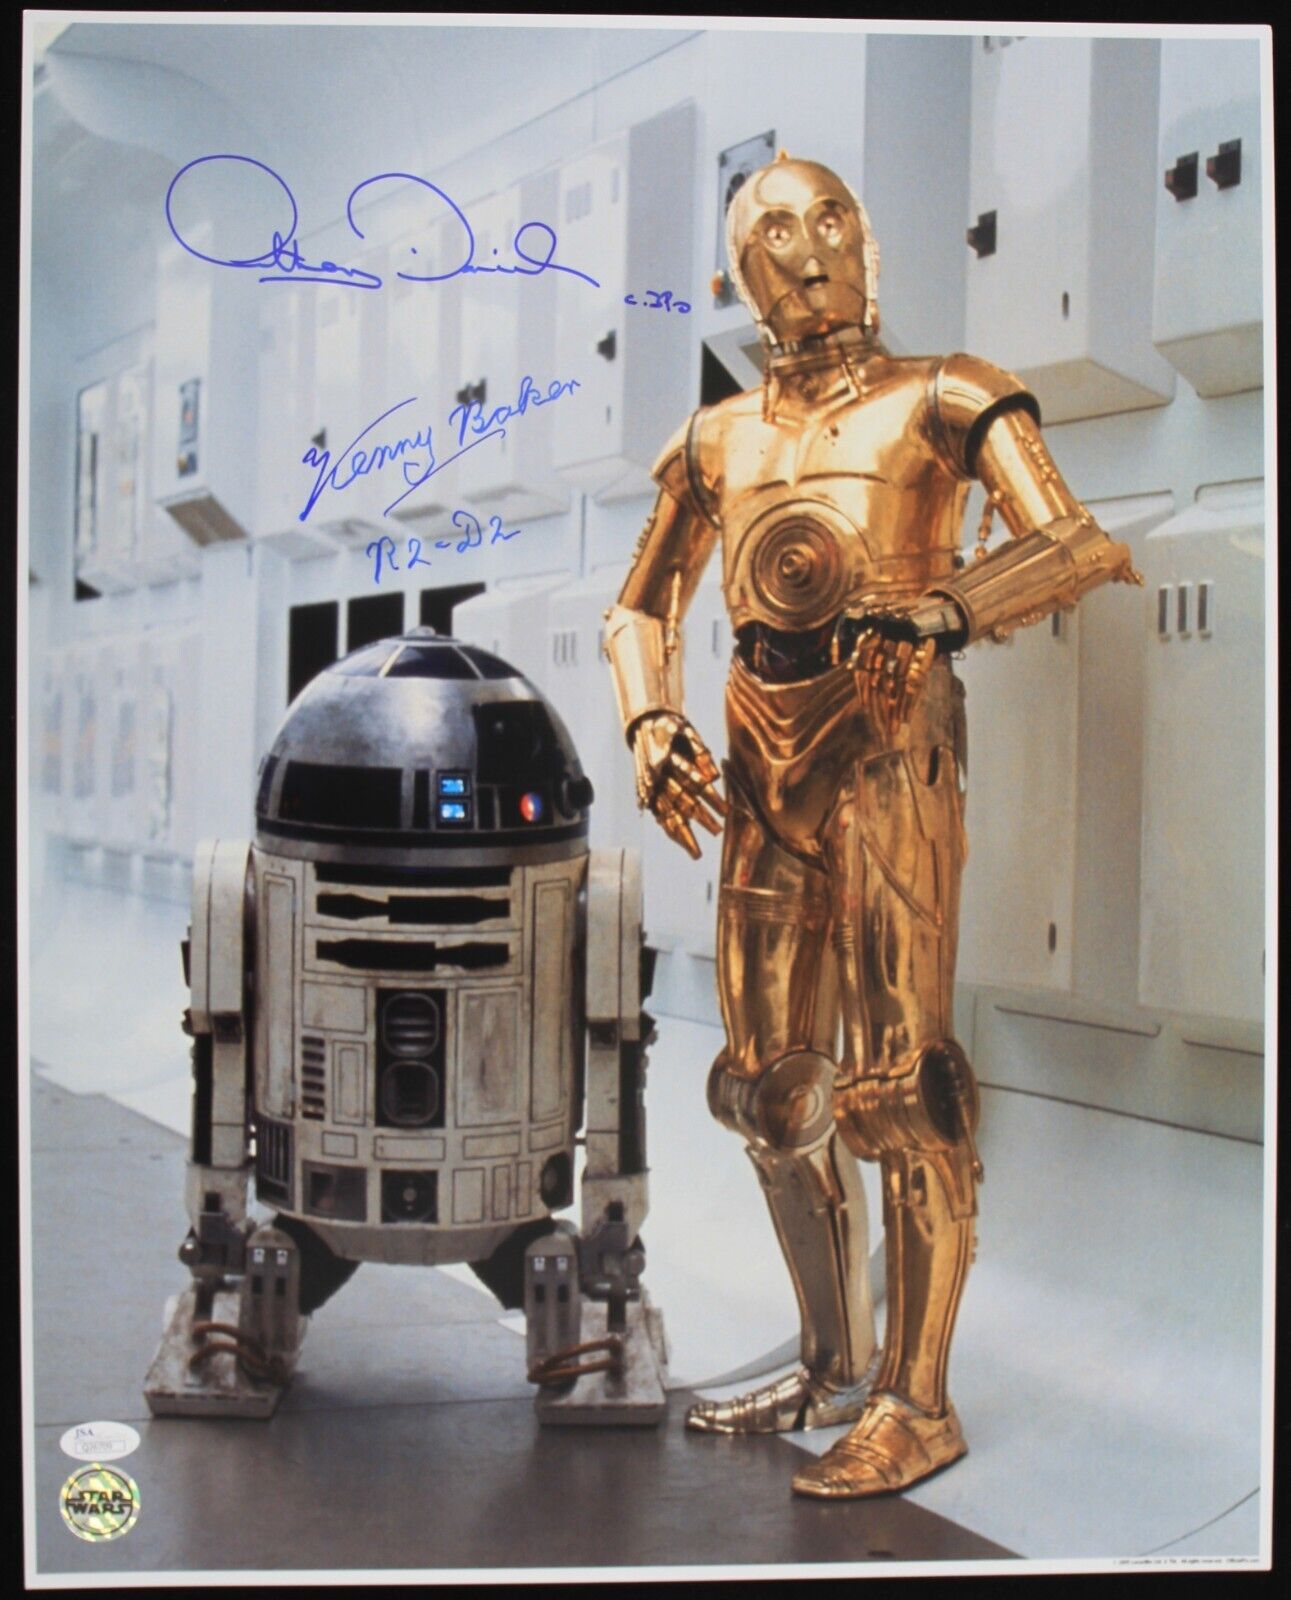 1977 R2-D2 & C3-PO Anthony Daniels/Kenny Baker Signed LE 16x20 Photo (JSA)